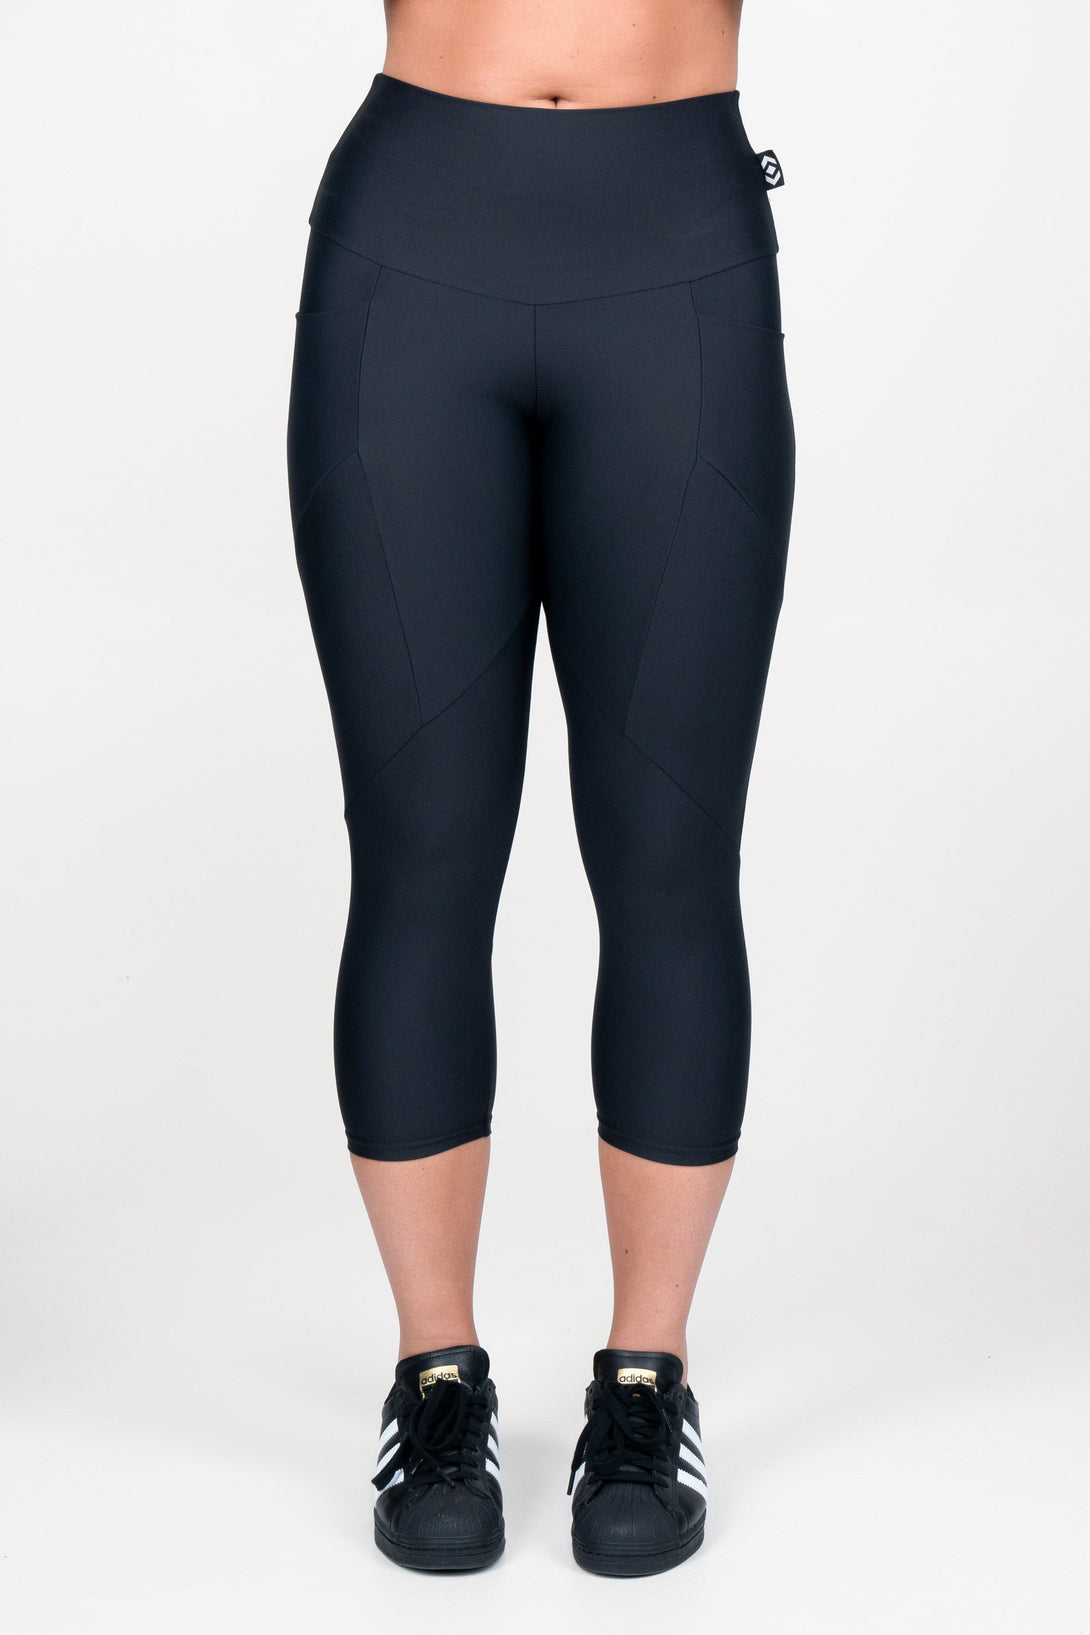 Black Performance - Pocket Booty Shaper High Waisted Capri Leggings-Activewear-Exoticathletica